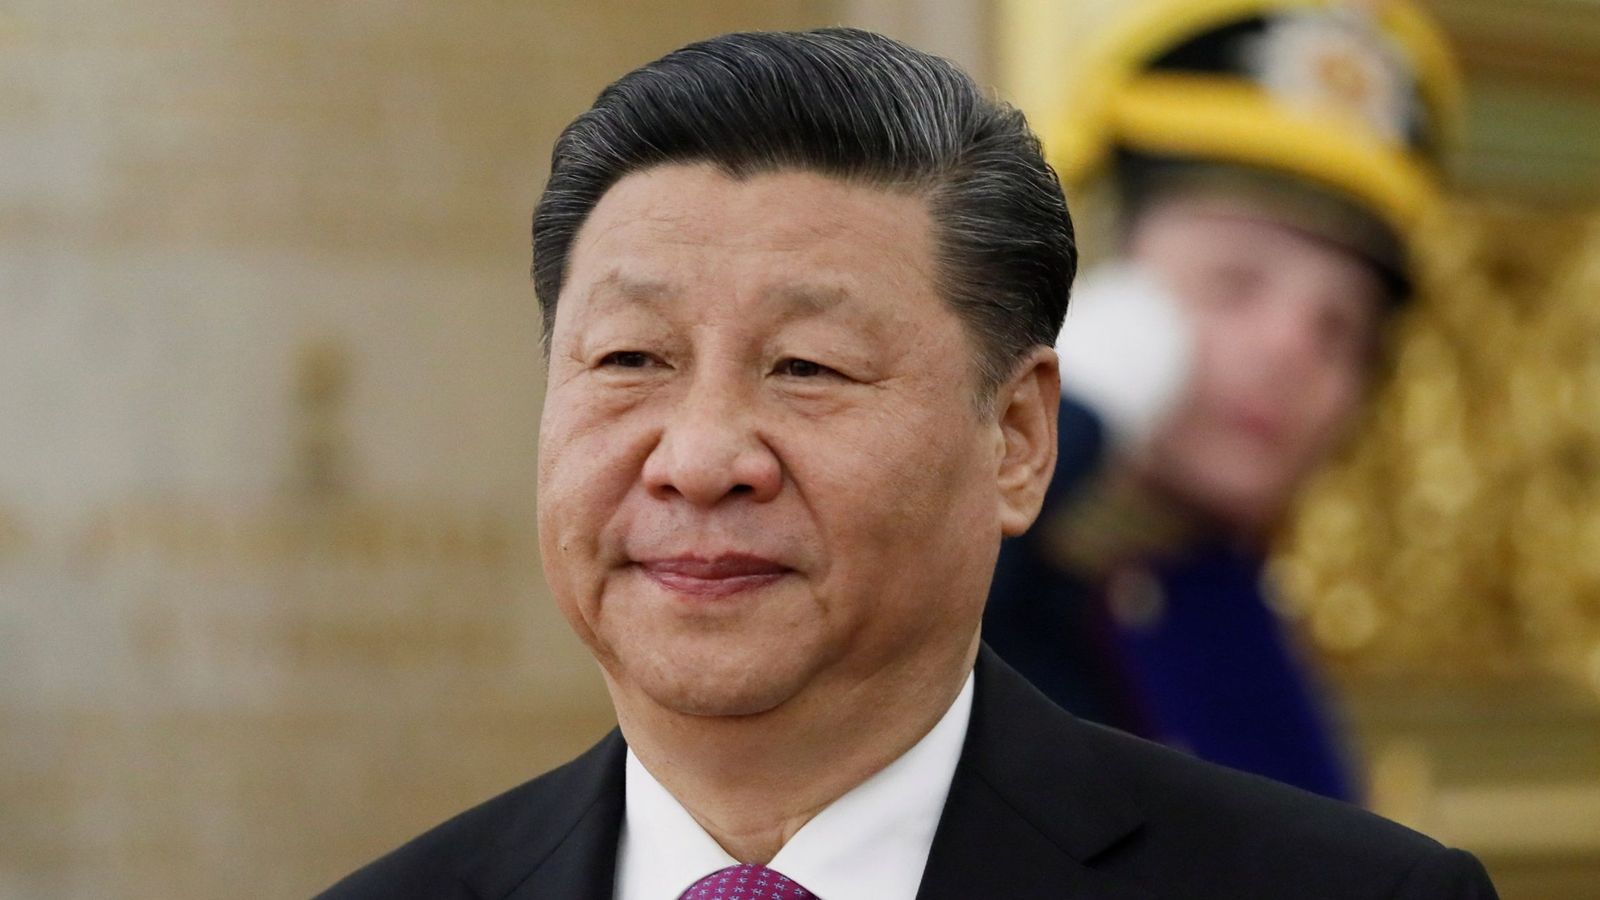 Foto: Xi Jinping, el líder chino. (Evgenia Novozhenina/Efe)